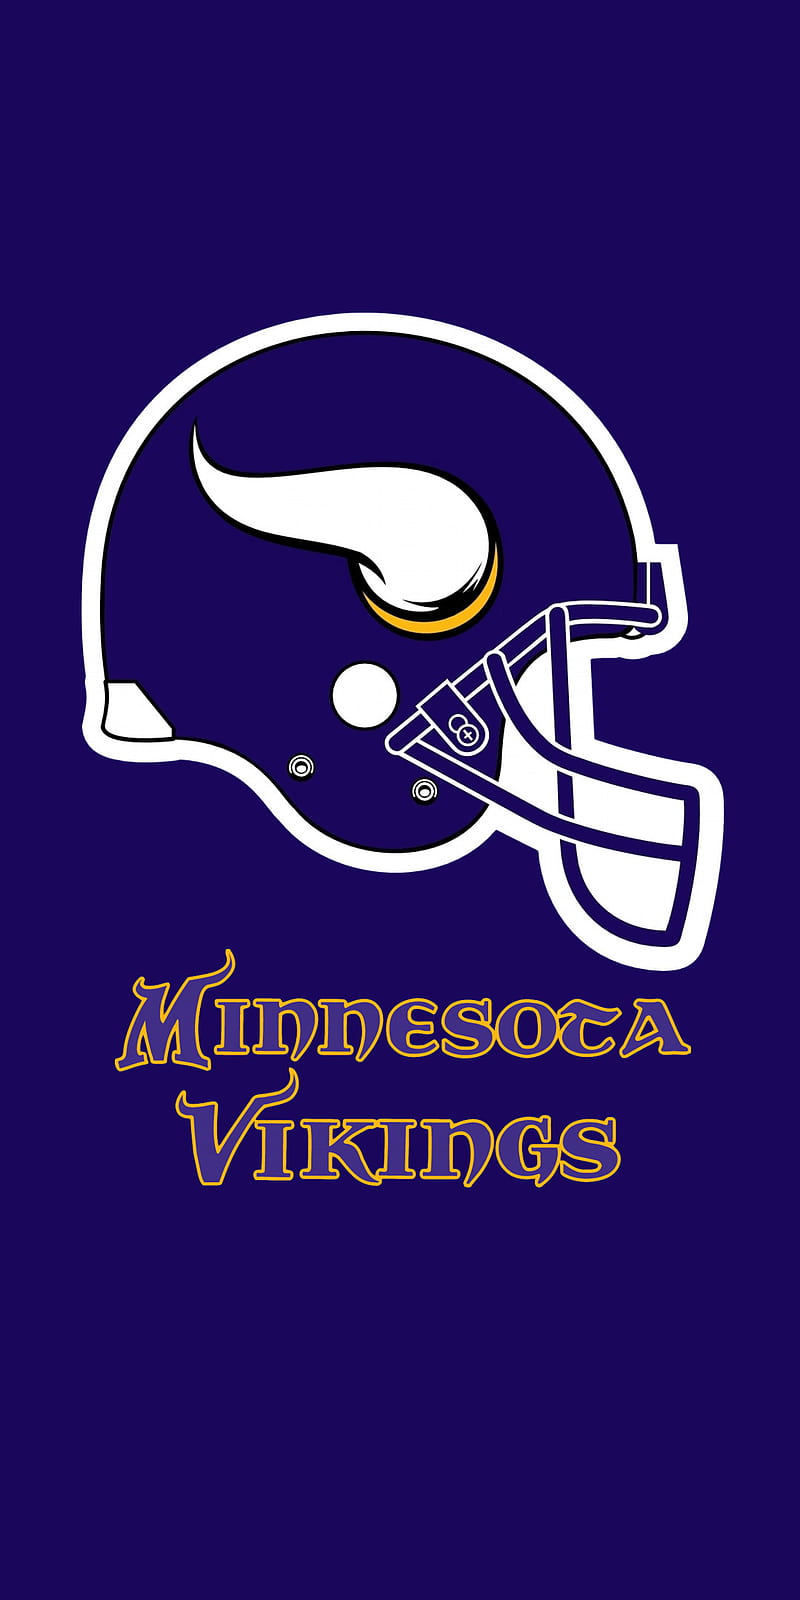 Minnesota Vikings 2019 Mobile Field NFL Schedule Wallpaper  Minnesota  vikings wallpaper, Minnesota vikings, Viking wallpaper